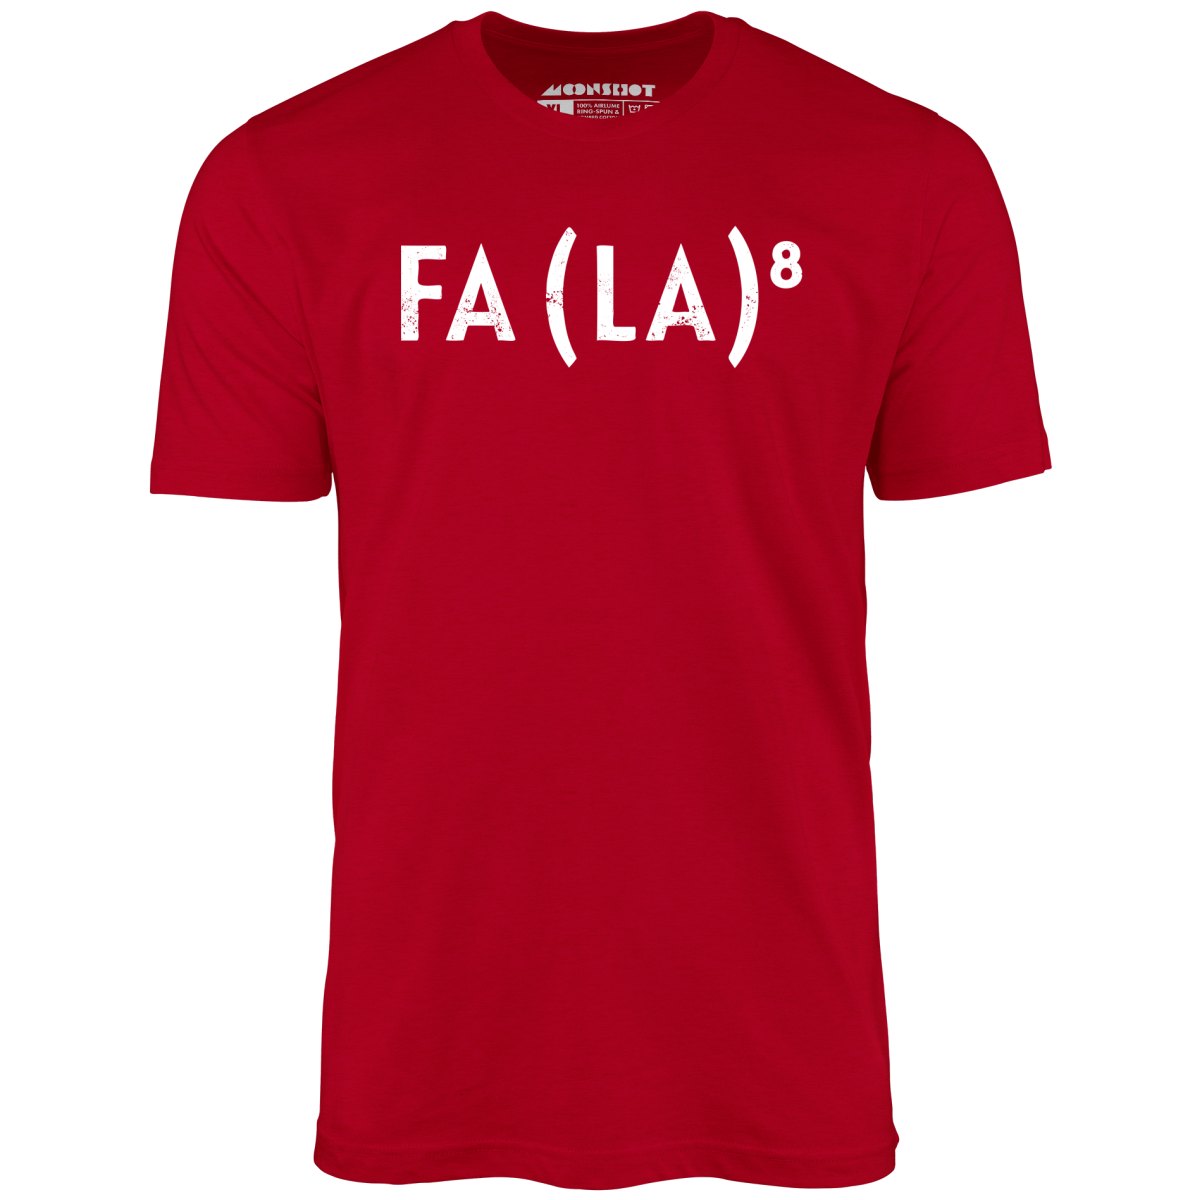 Fa La to the 8th - Unisex T-Shirt